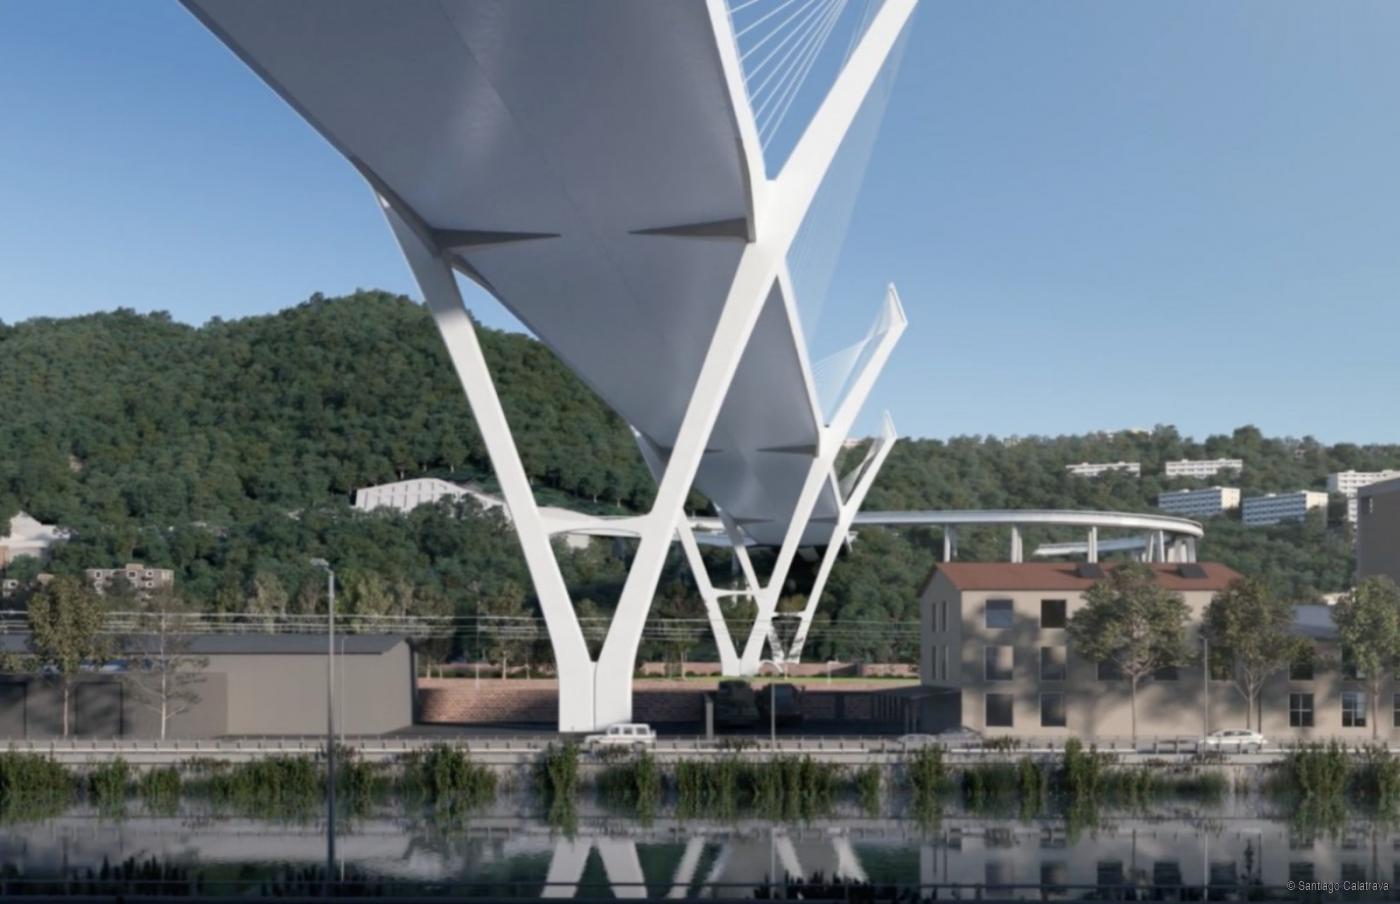 Reconstruction of the Morandi Bridge in Genoa